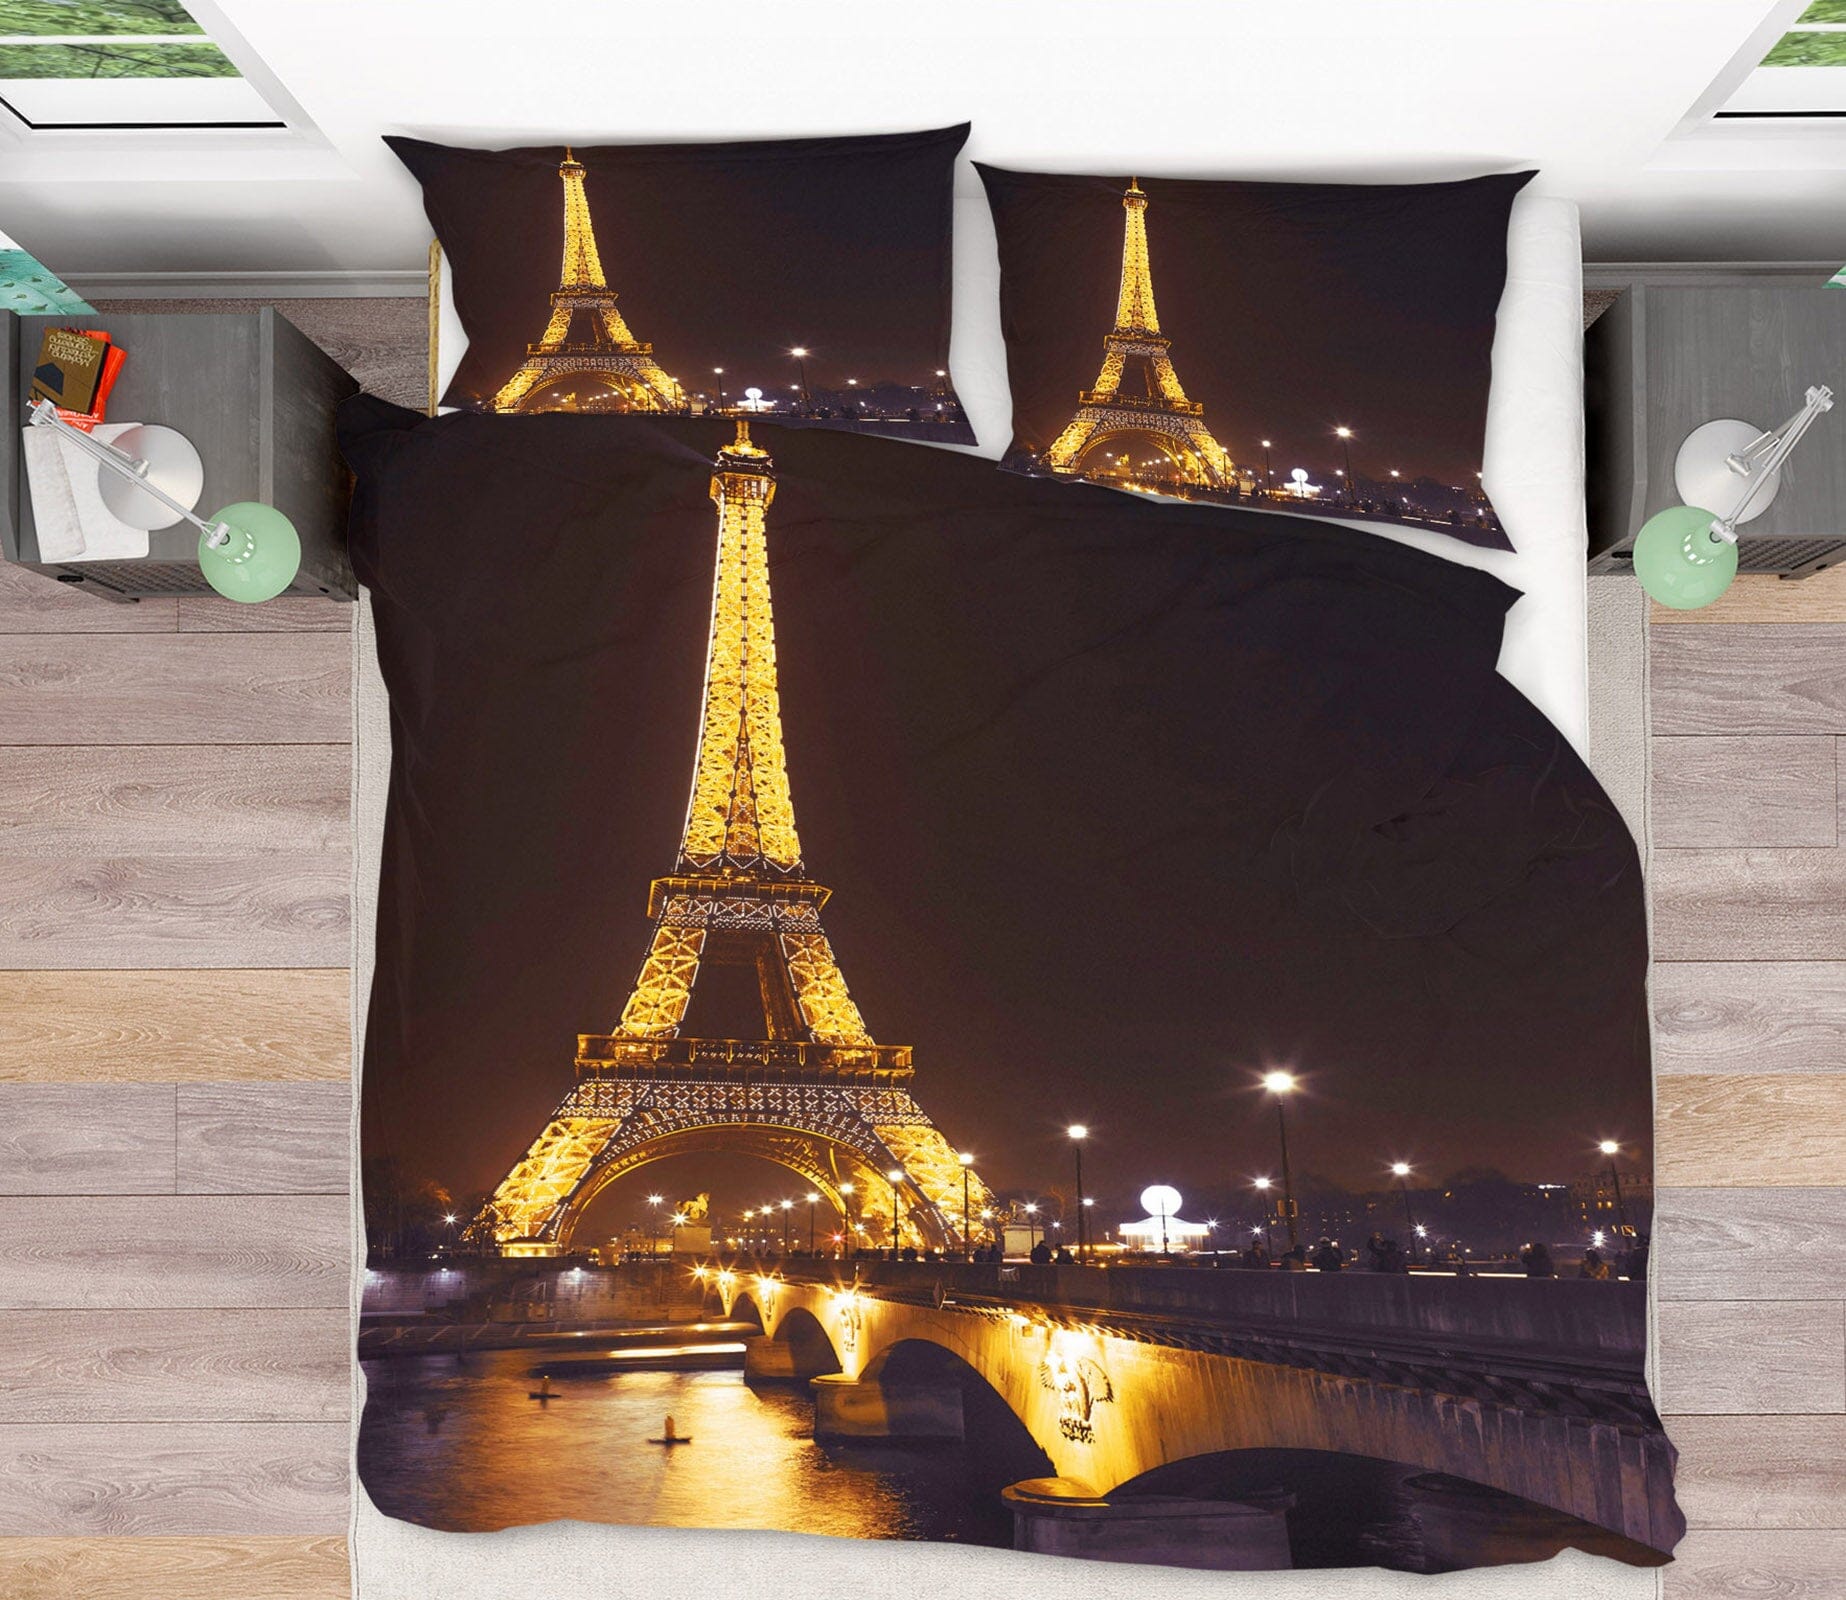 3D Eiffel Tower 2003 Assaf Frank Bedding Bed Pillowcases Quilt Quiet Covers AJ Creativity Home 